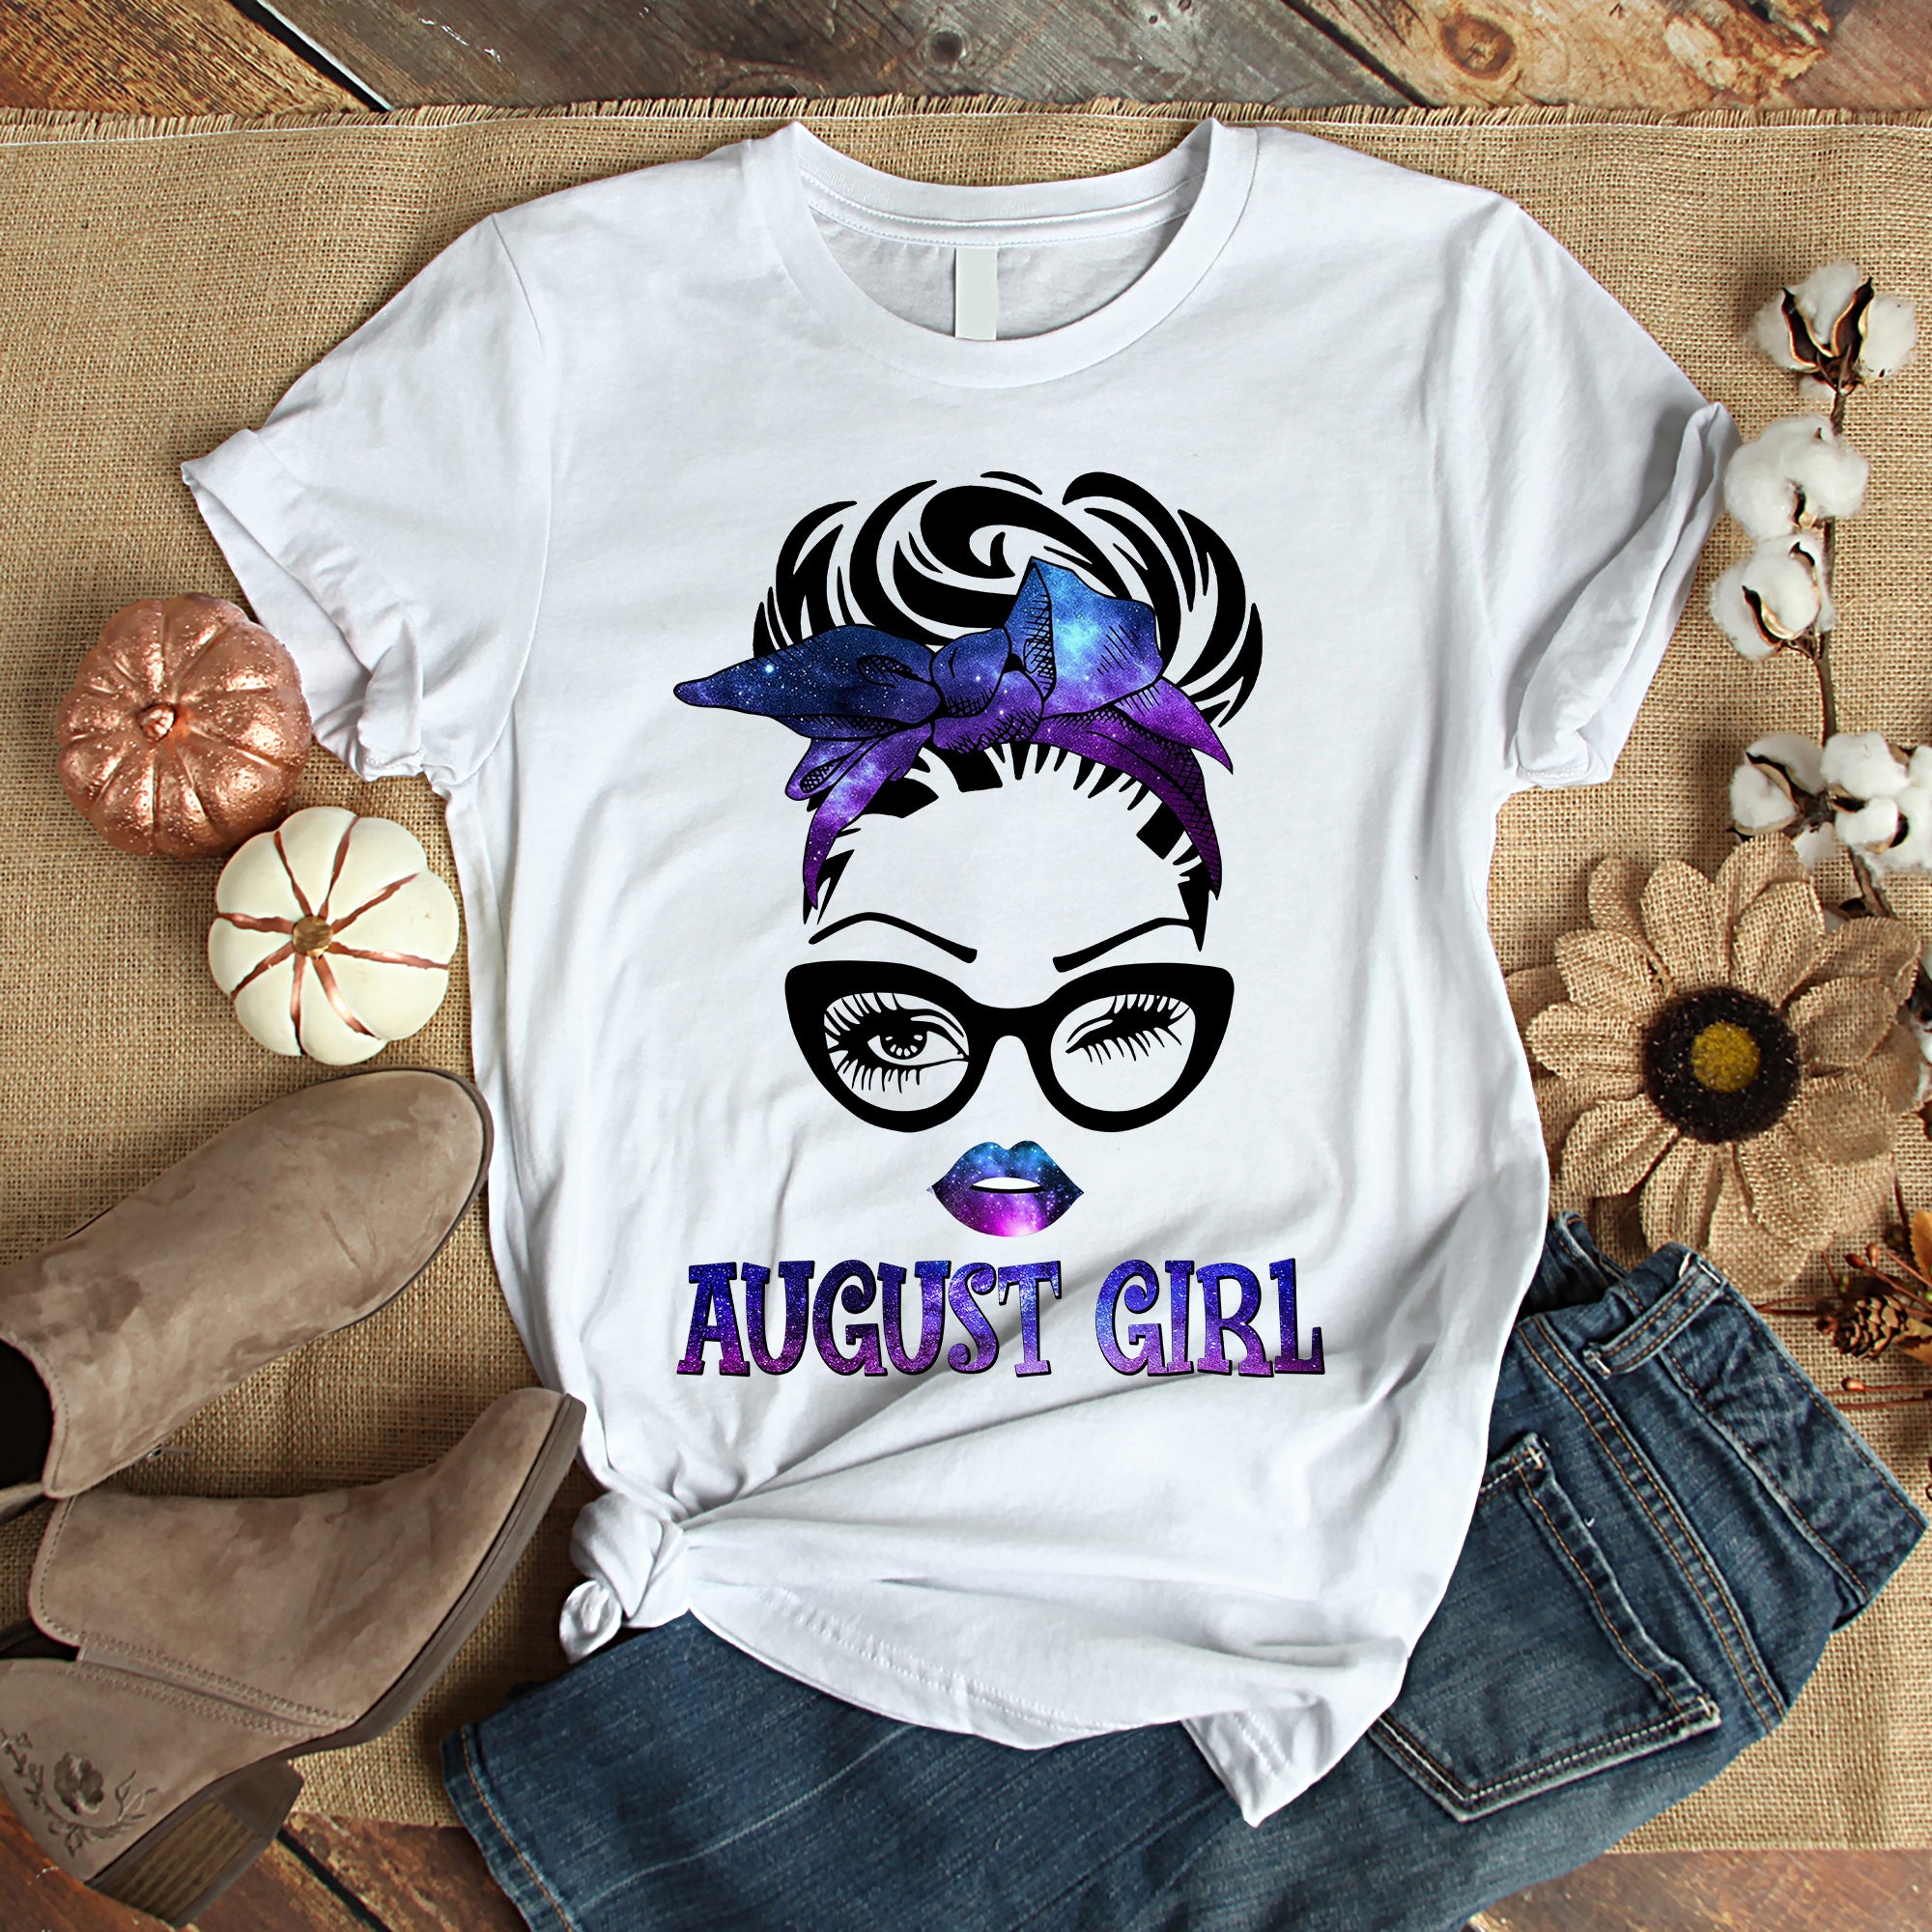 August Girl Birthday Shirt For Women, Girls, Sisters. Happy Birthday T-Shirt